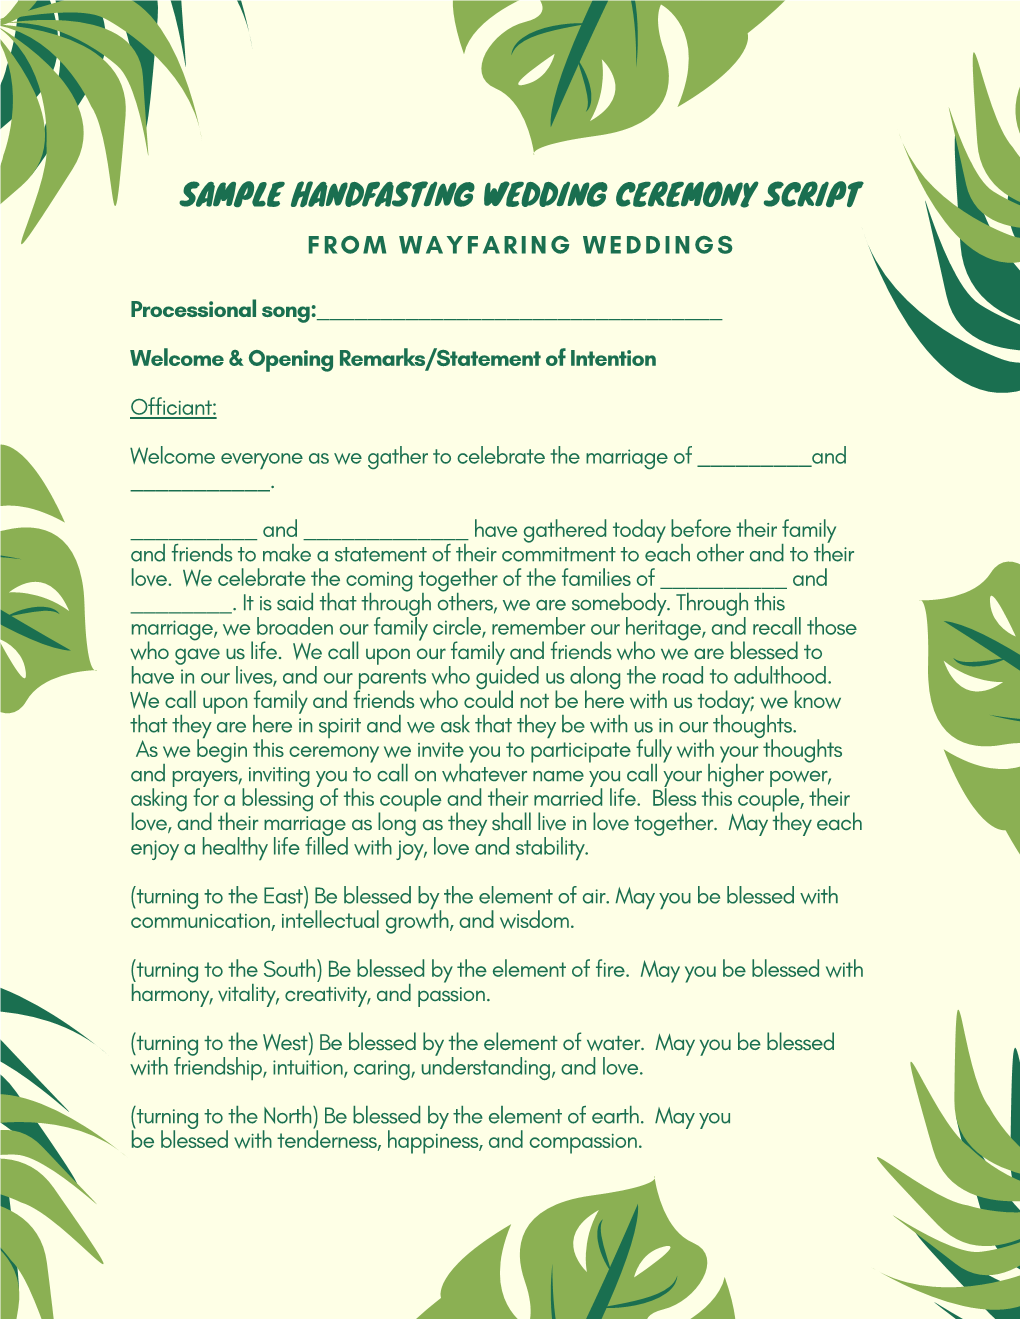 Sample Handfasting Wedding Ceremony Script from Wayfaring Weddings